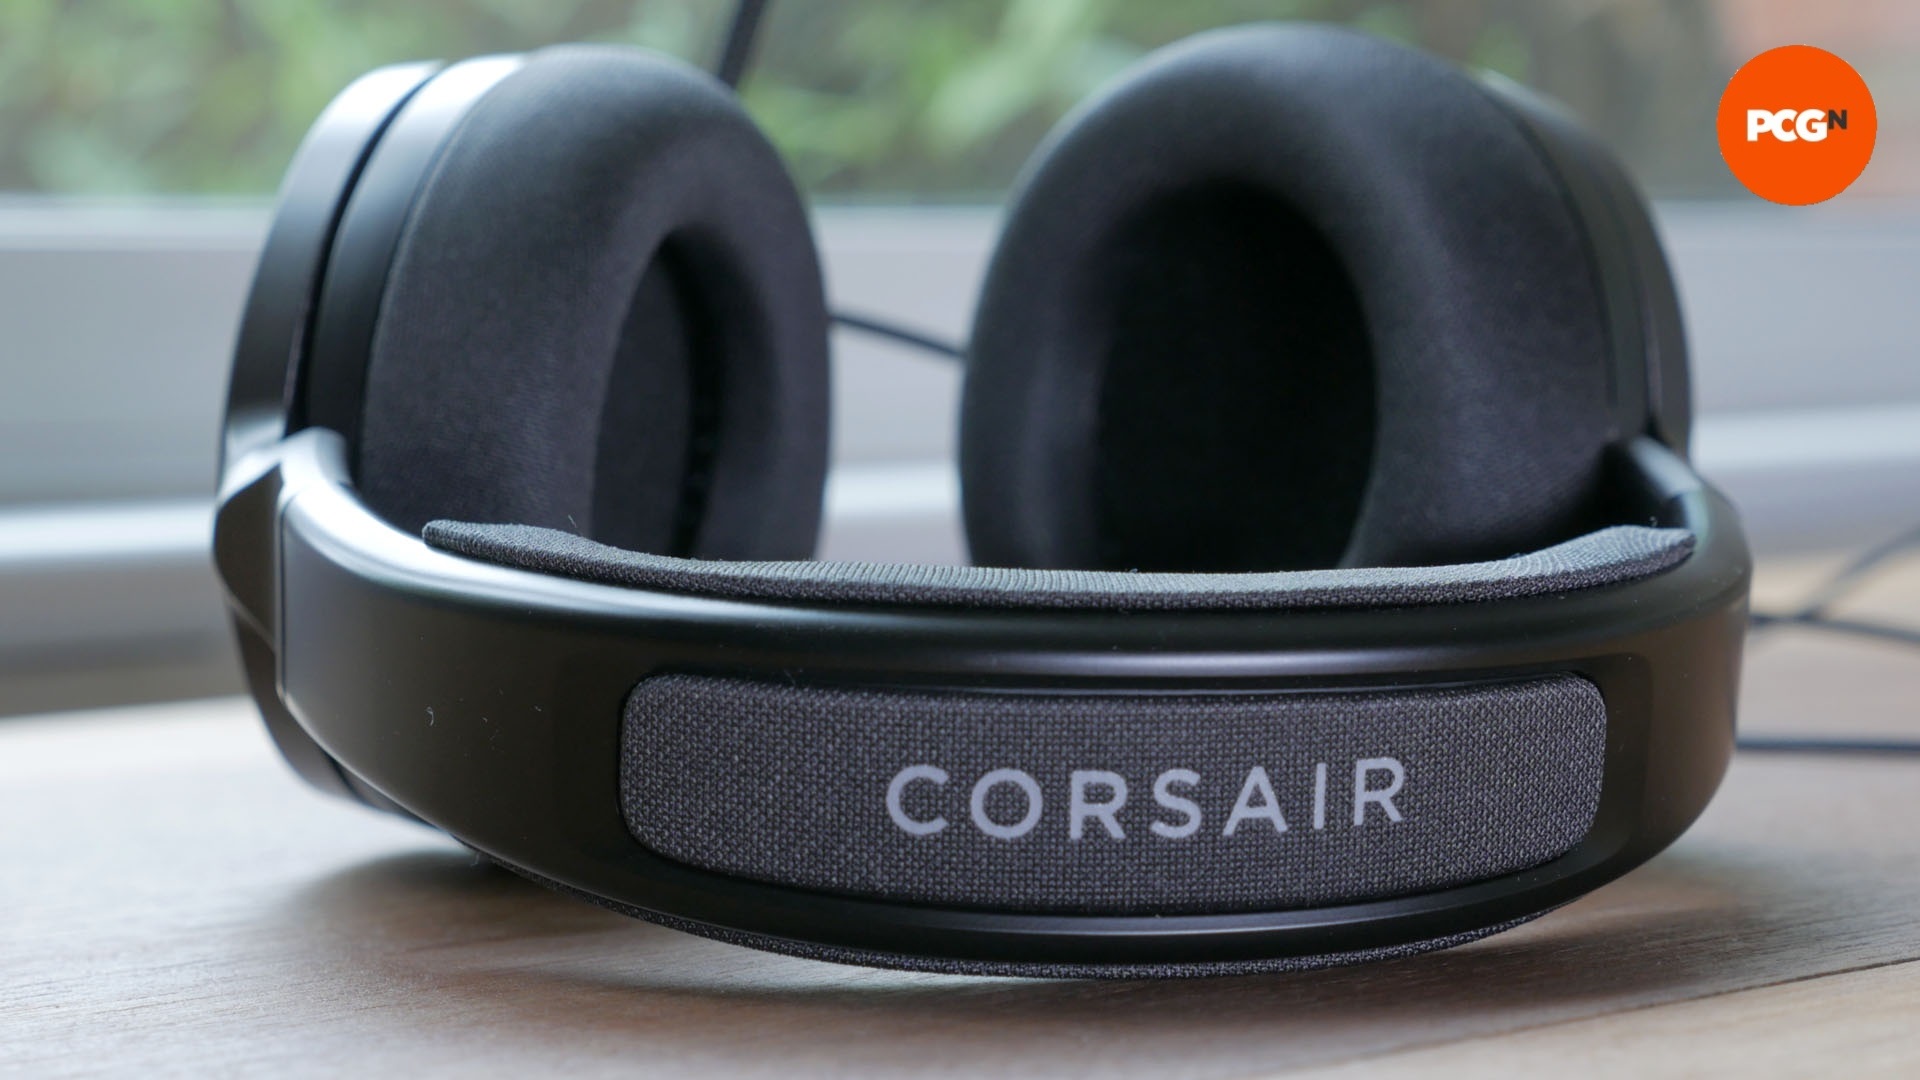 Corsair Virtuoso Pro review image showing the Corsair logo on the headband.